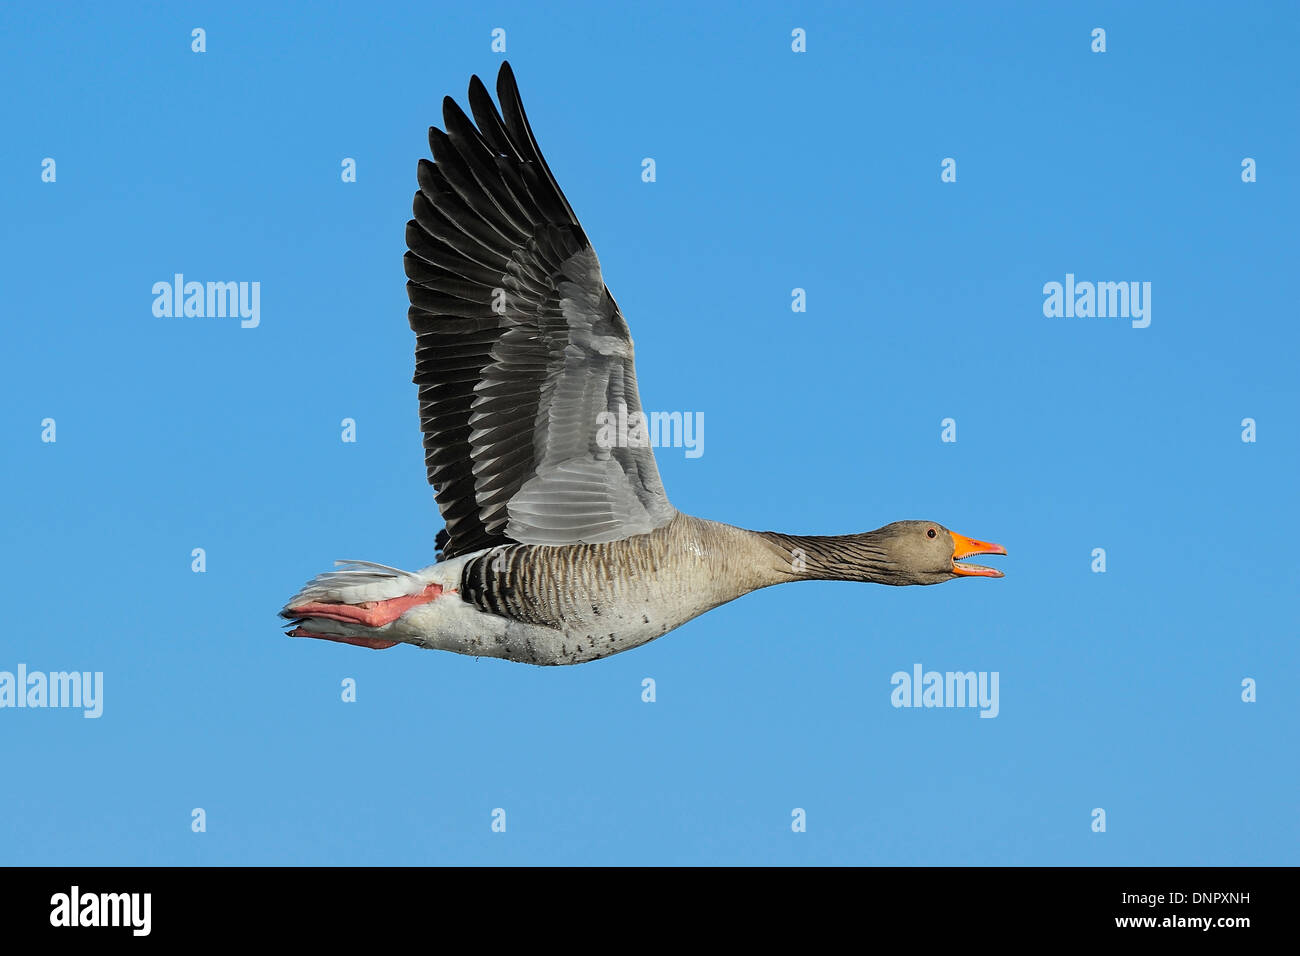 Greylag Goose (Anser anser) in Flight, Kuhkopf-Knoblochsaue Nature Reserve, Hesse, Germany Stock Photo